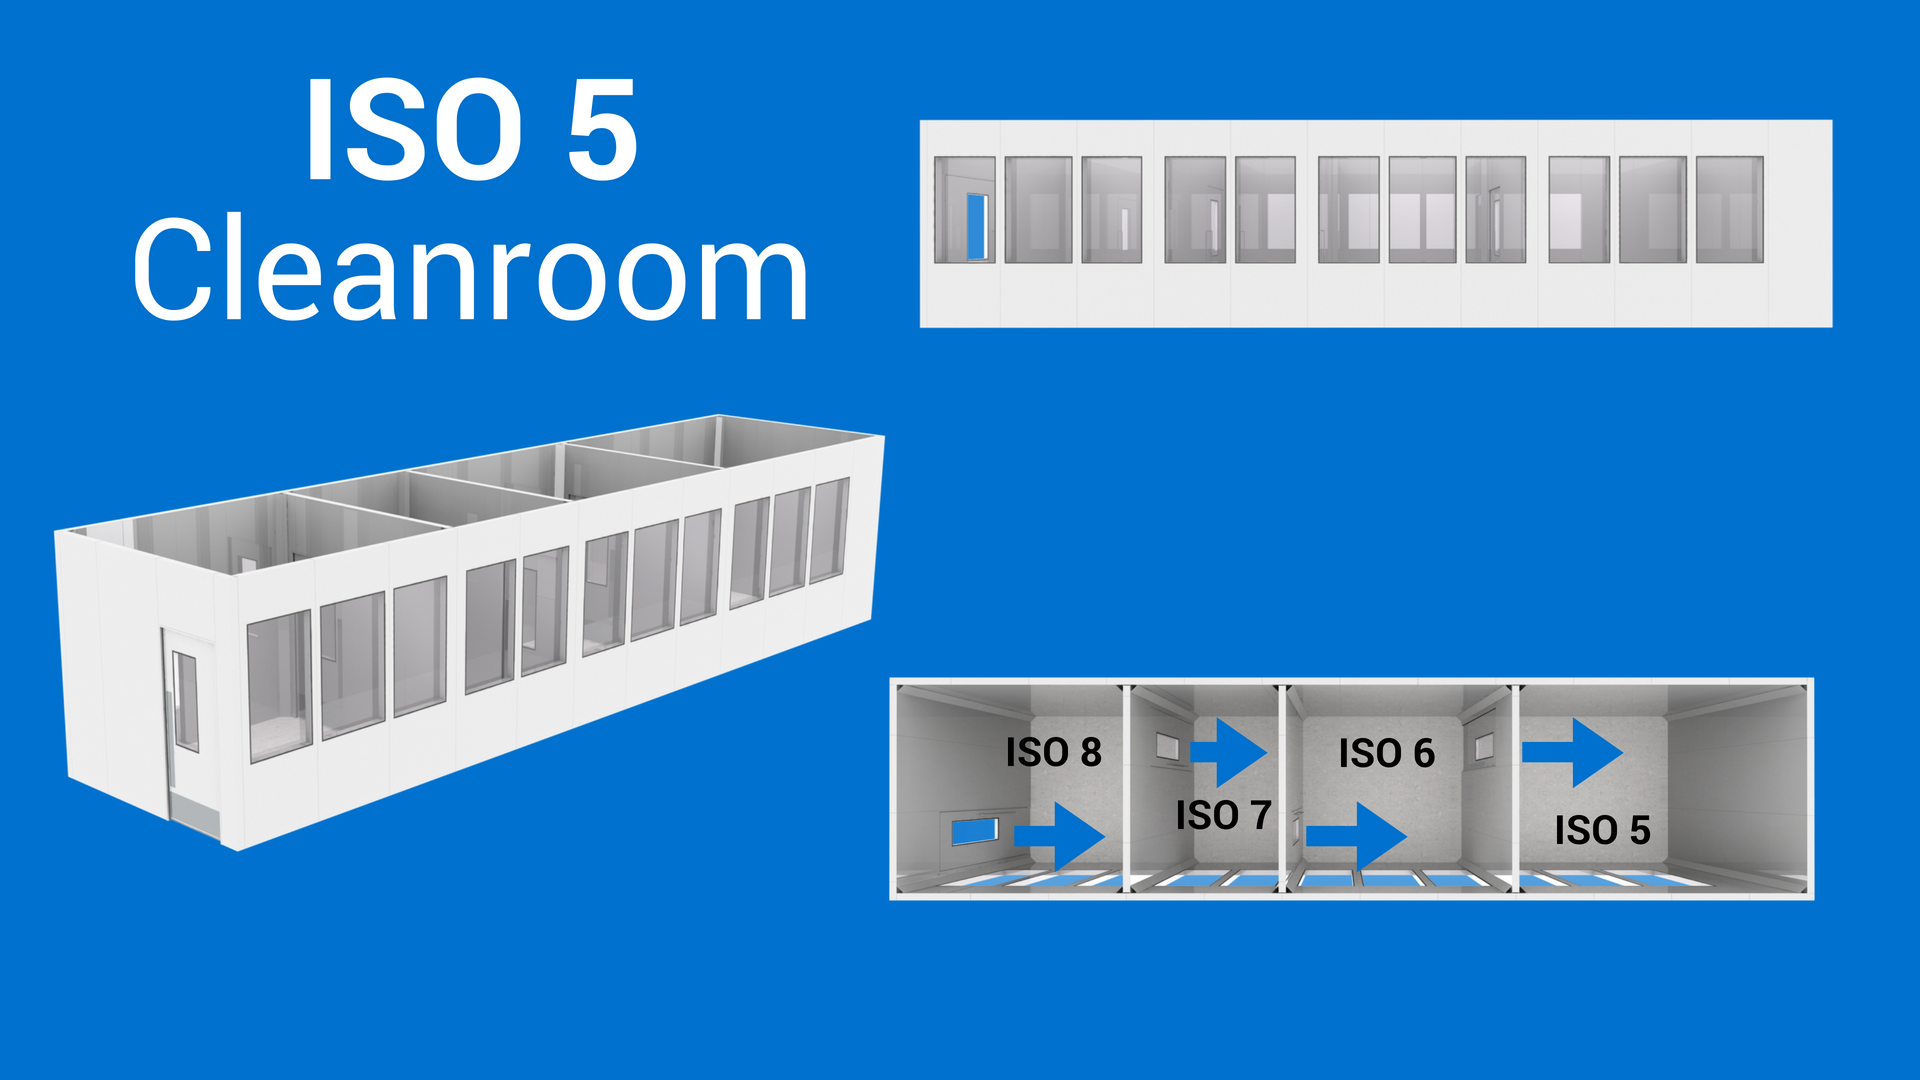 ISO 5 cleanroom